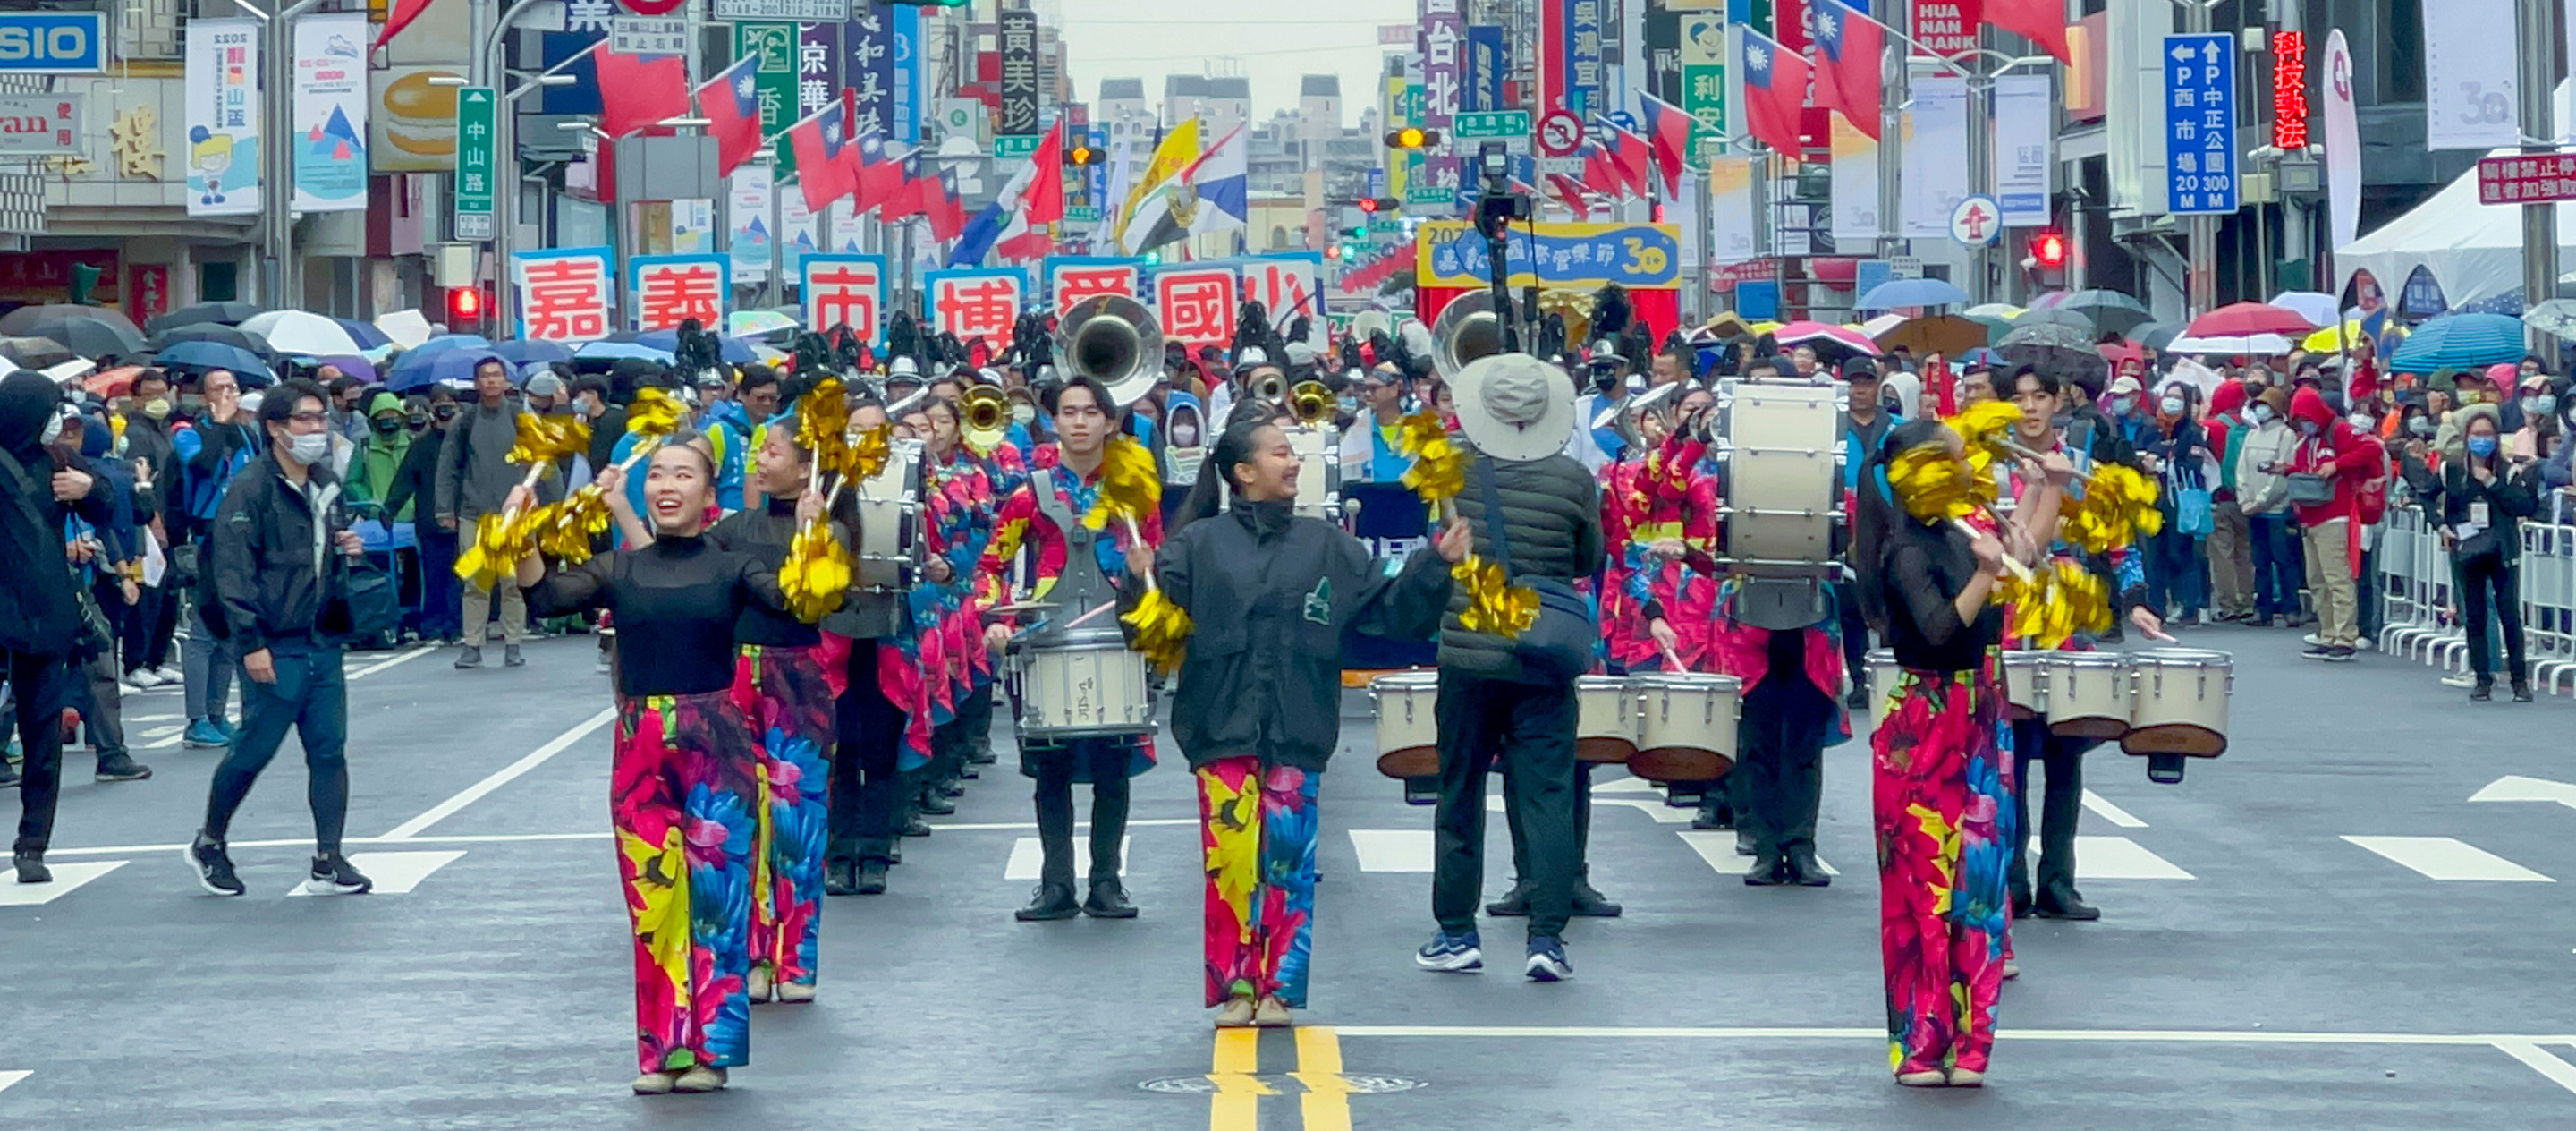 Chiayi City lnternational Band Festival เทศกาลวงดนตรีที่สร้างสีสันและความสุขของคนไต้หวัน